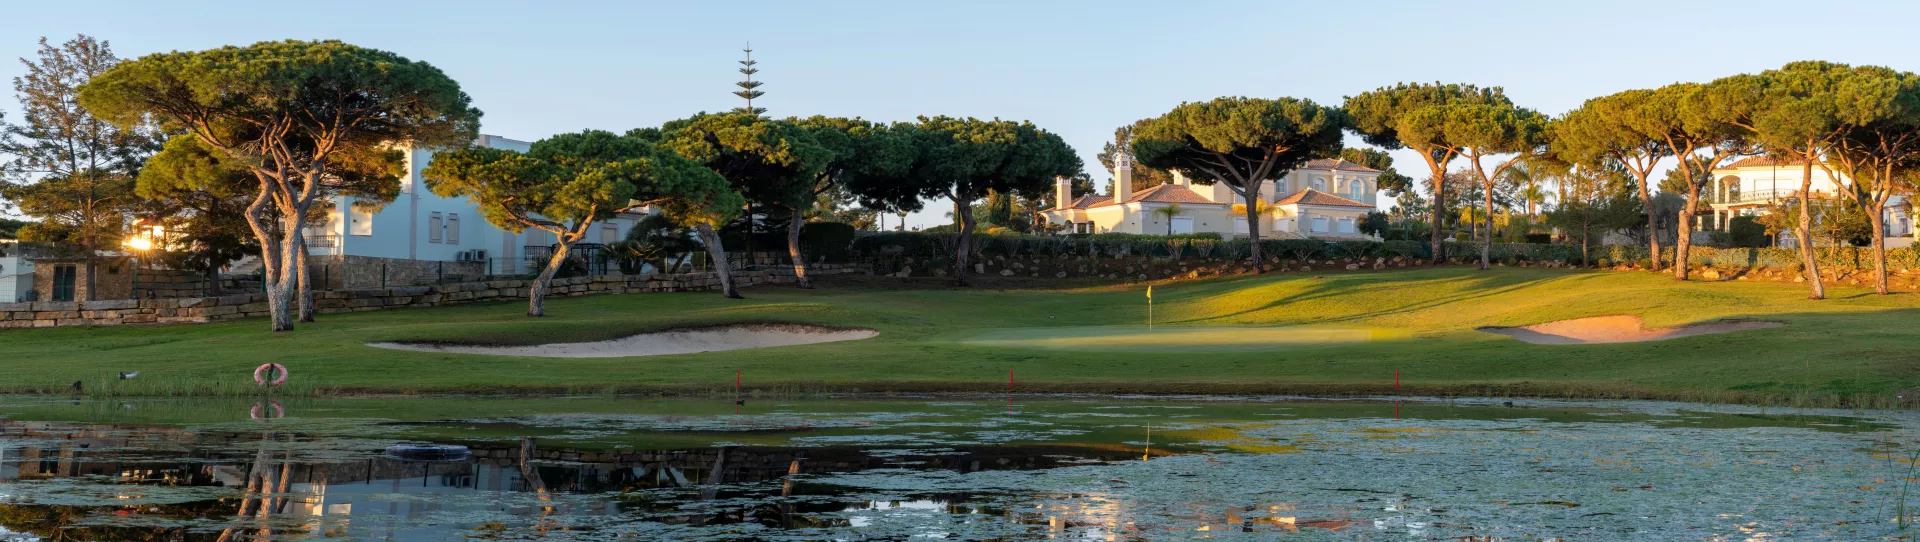 Portugal golf courses - Vila Sol Golf Course - Photo 2